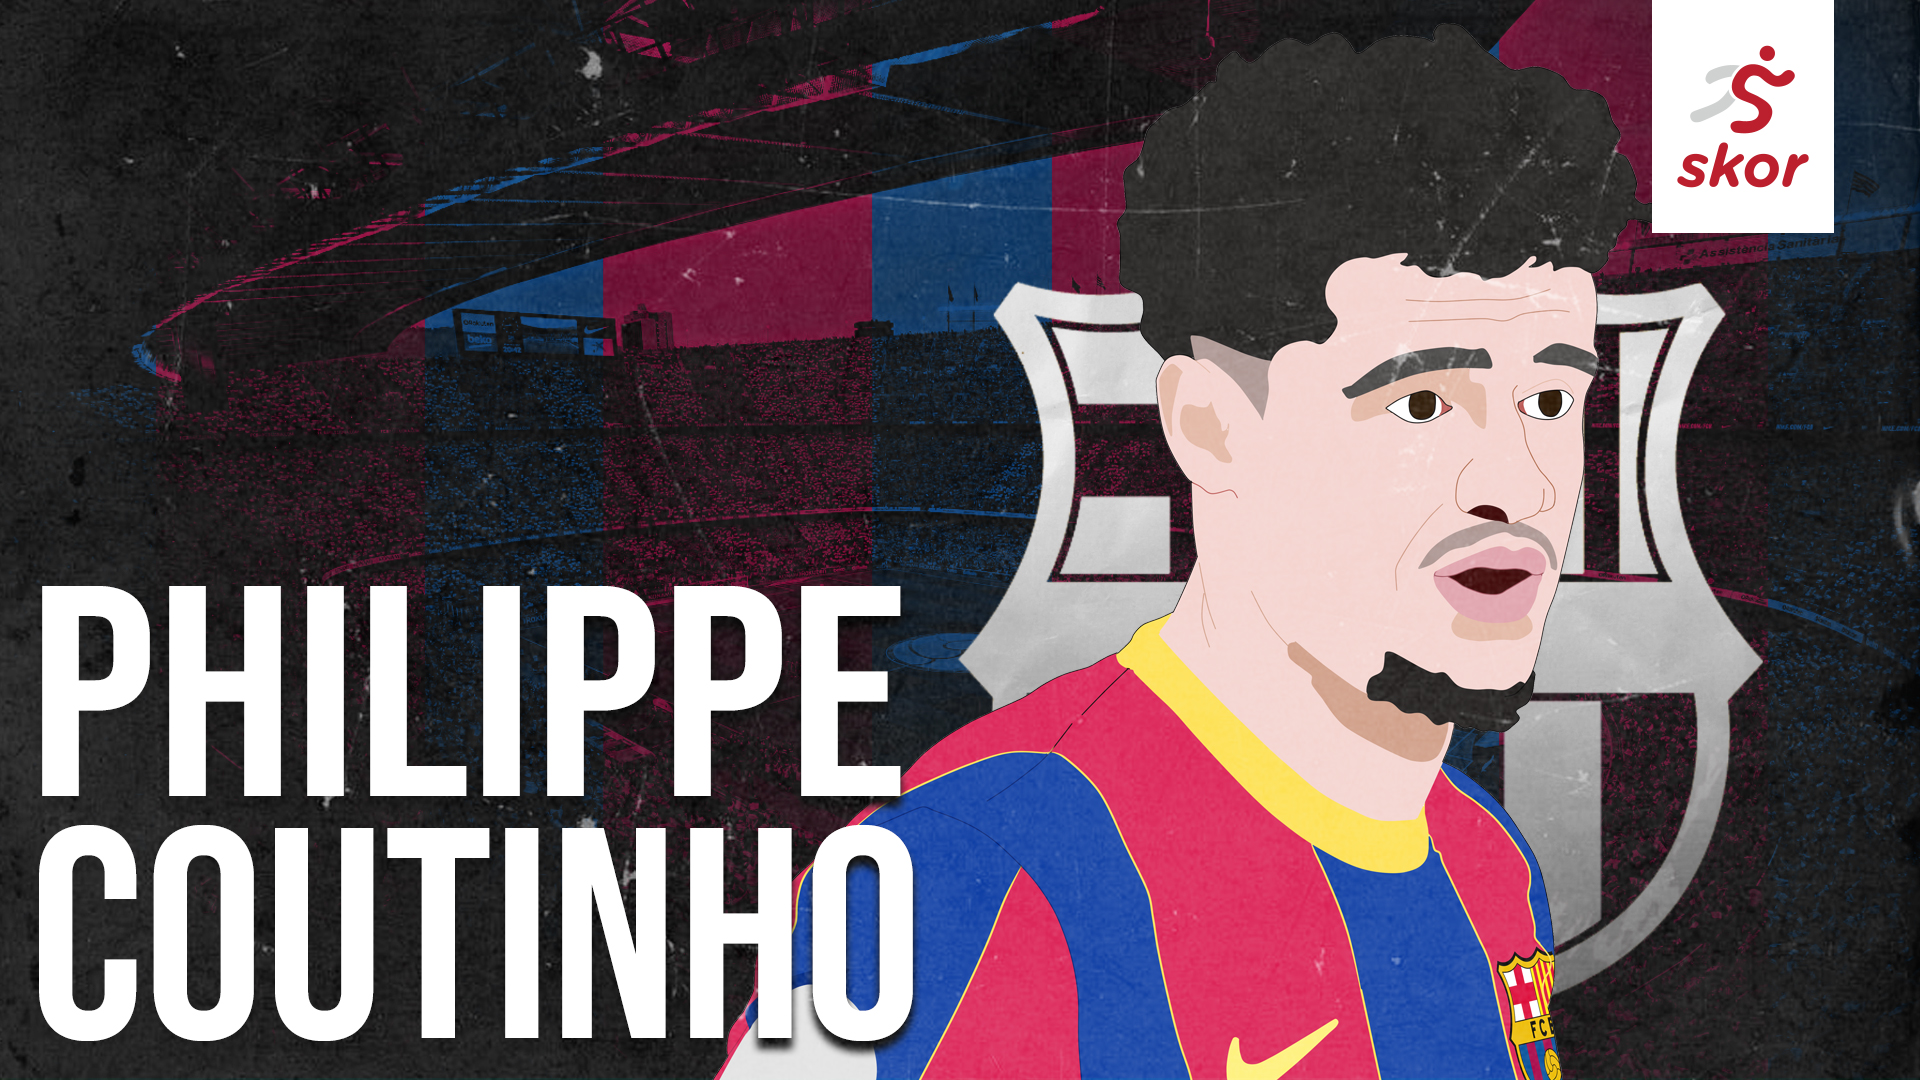 Karier Philippe Coutinho di Barcelona dalam Bahaya, Cuma Punya Waktu Sebulan untuk Unjuk Gigi